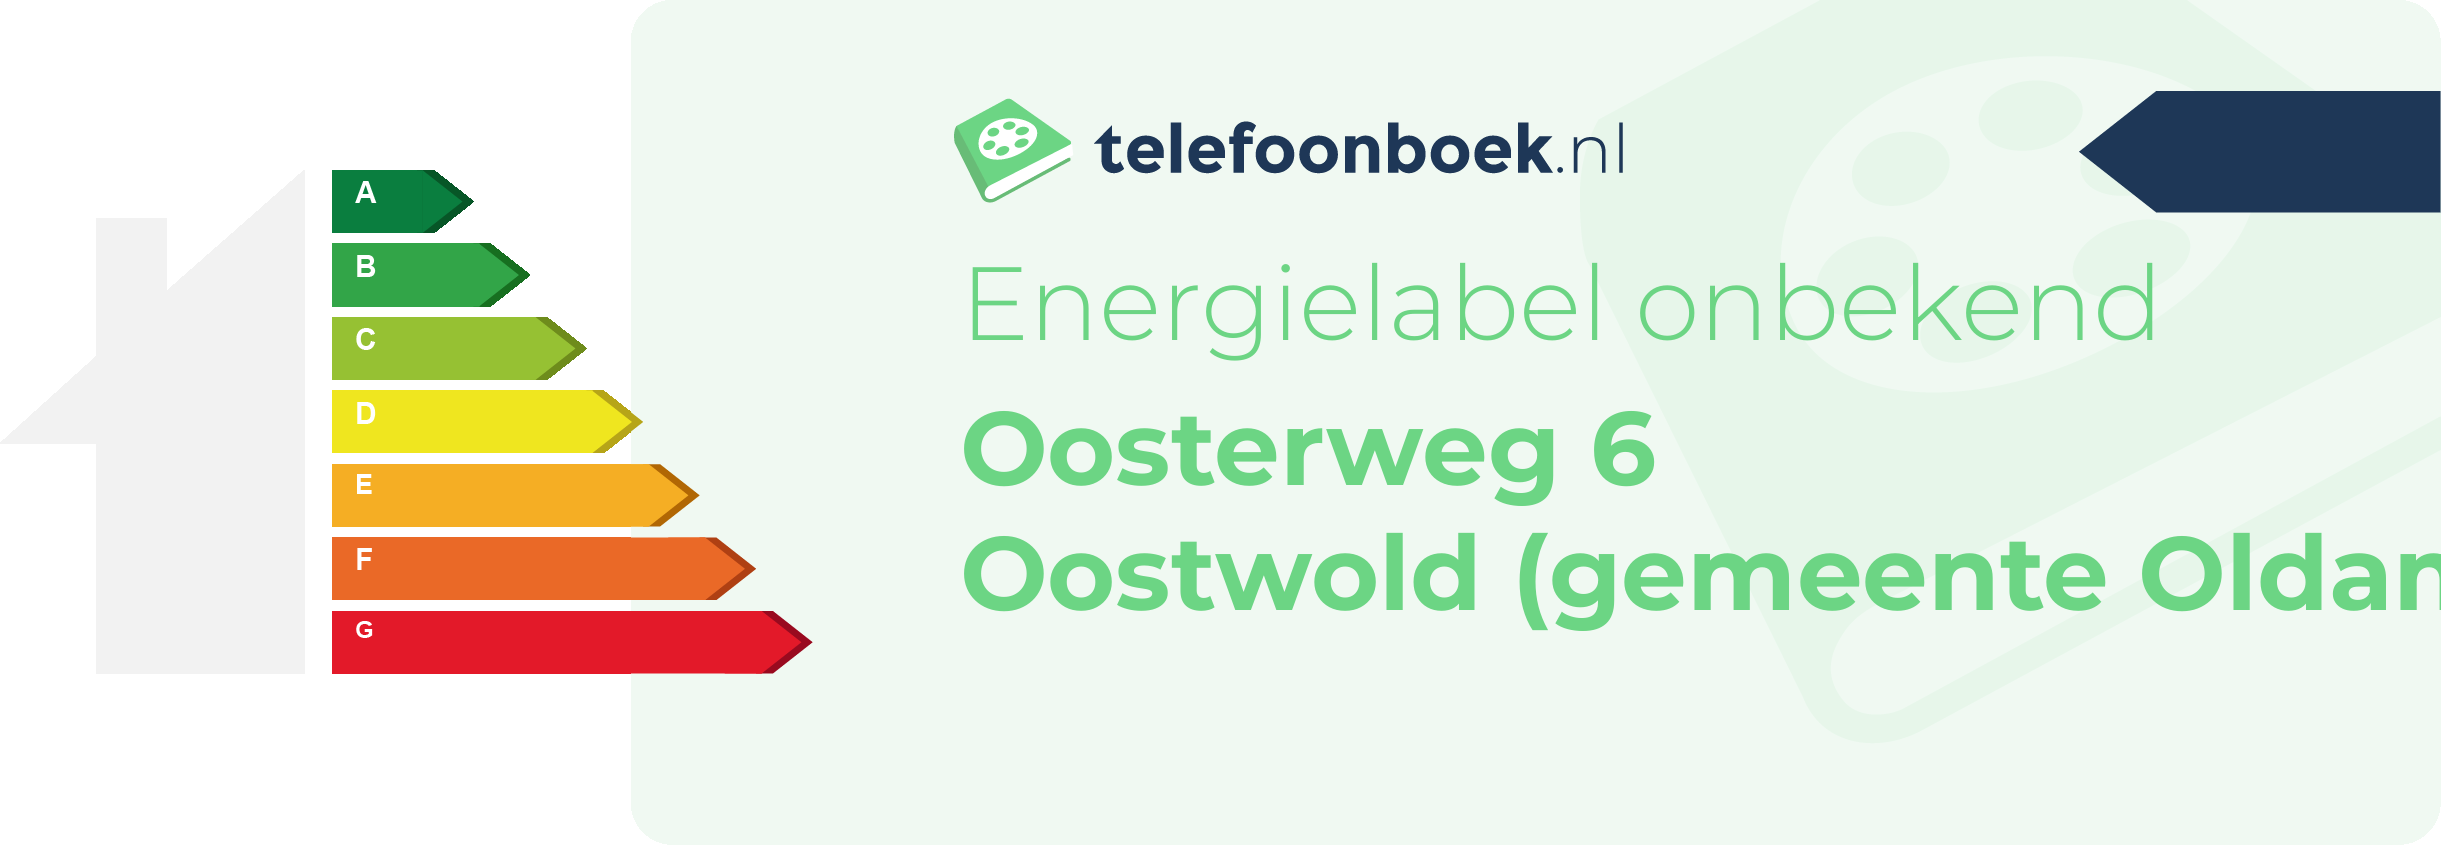 Energielabel Oosterweg 6 Oostwold (gemeente Oldambt Groningen)